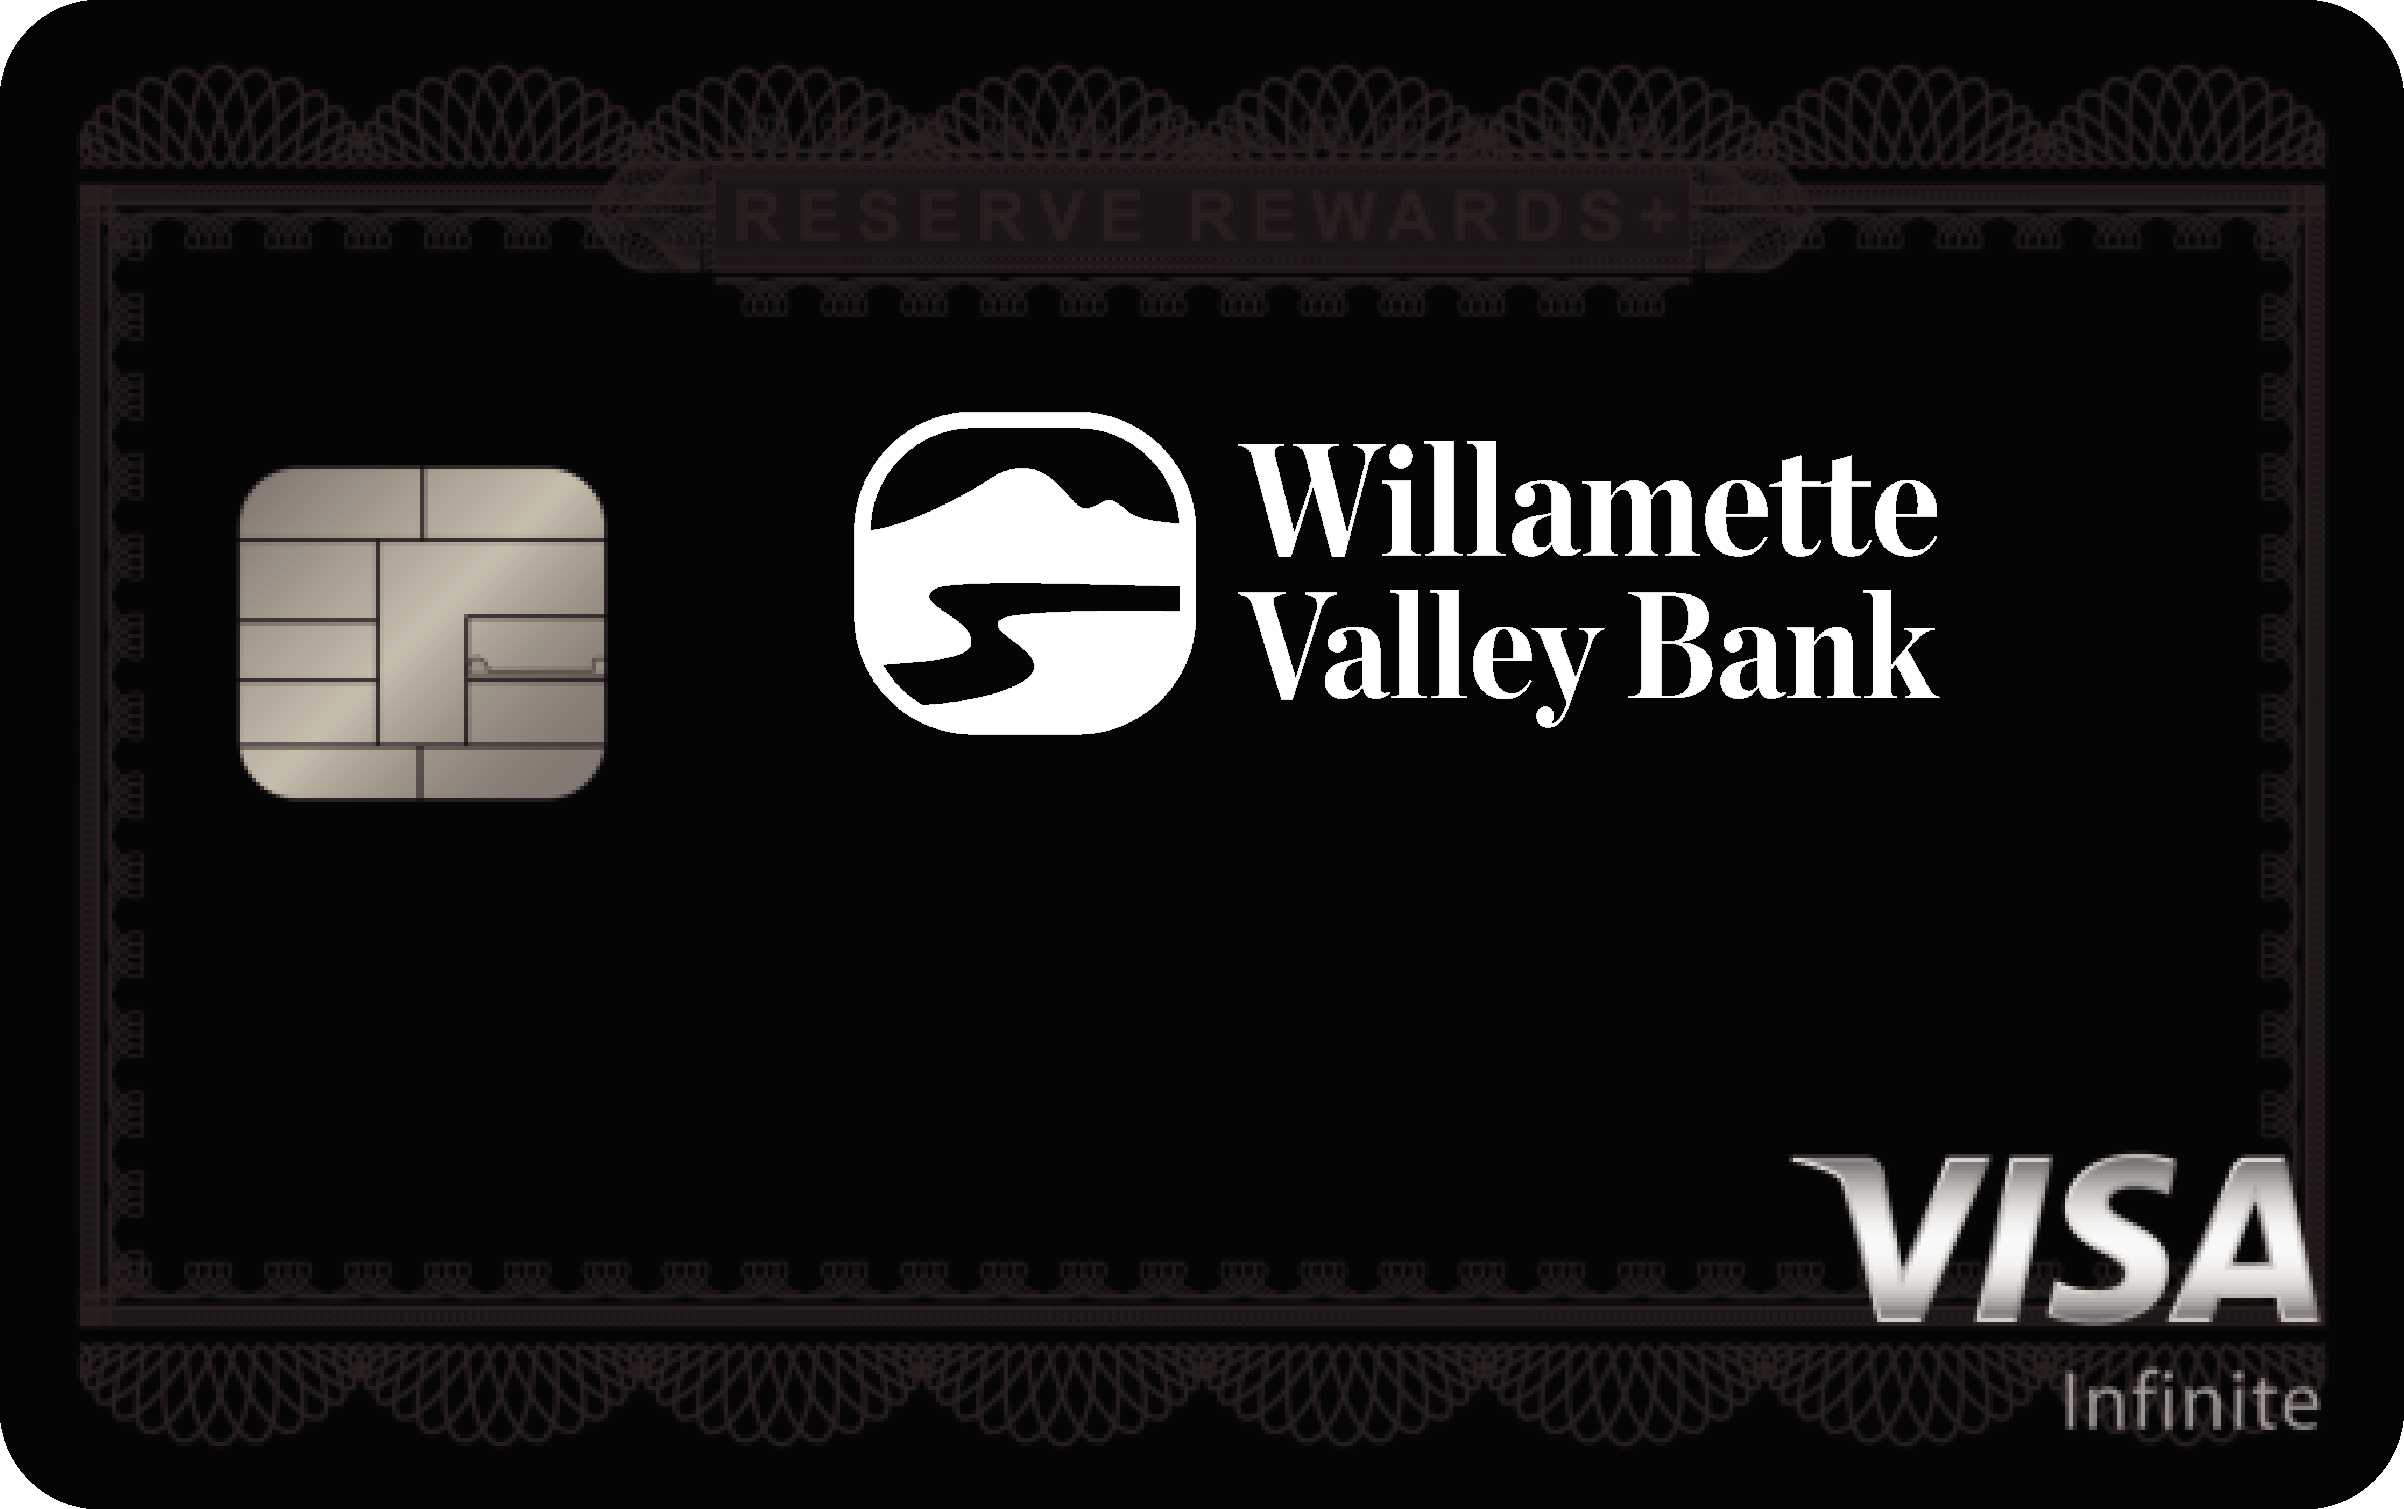 Willamette Valley Bank